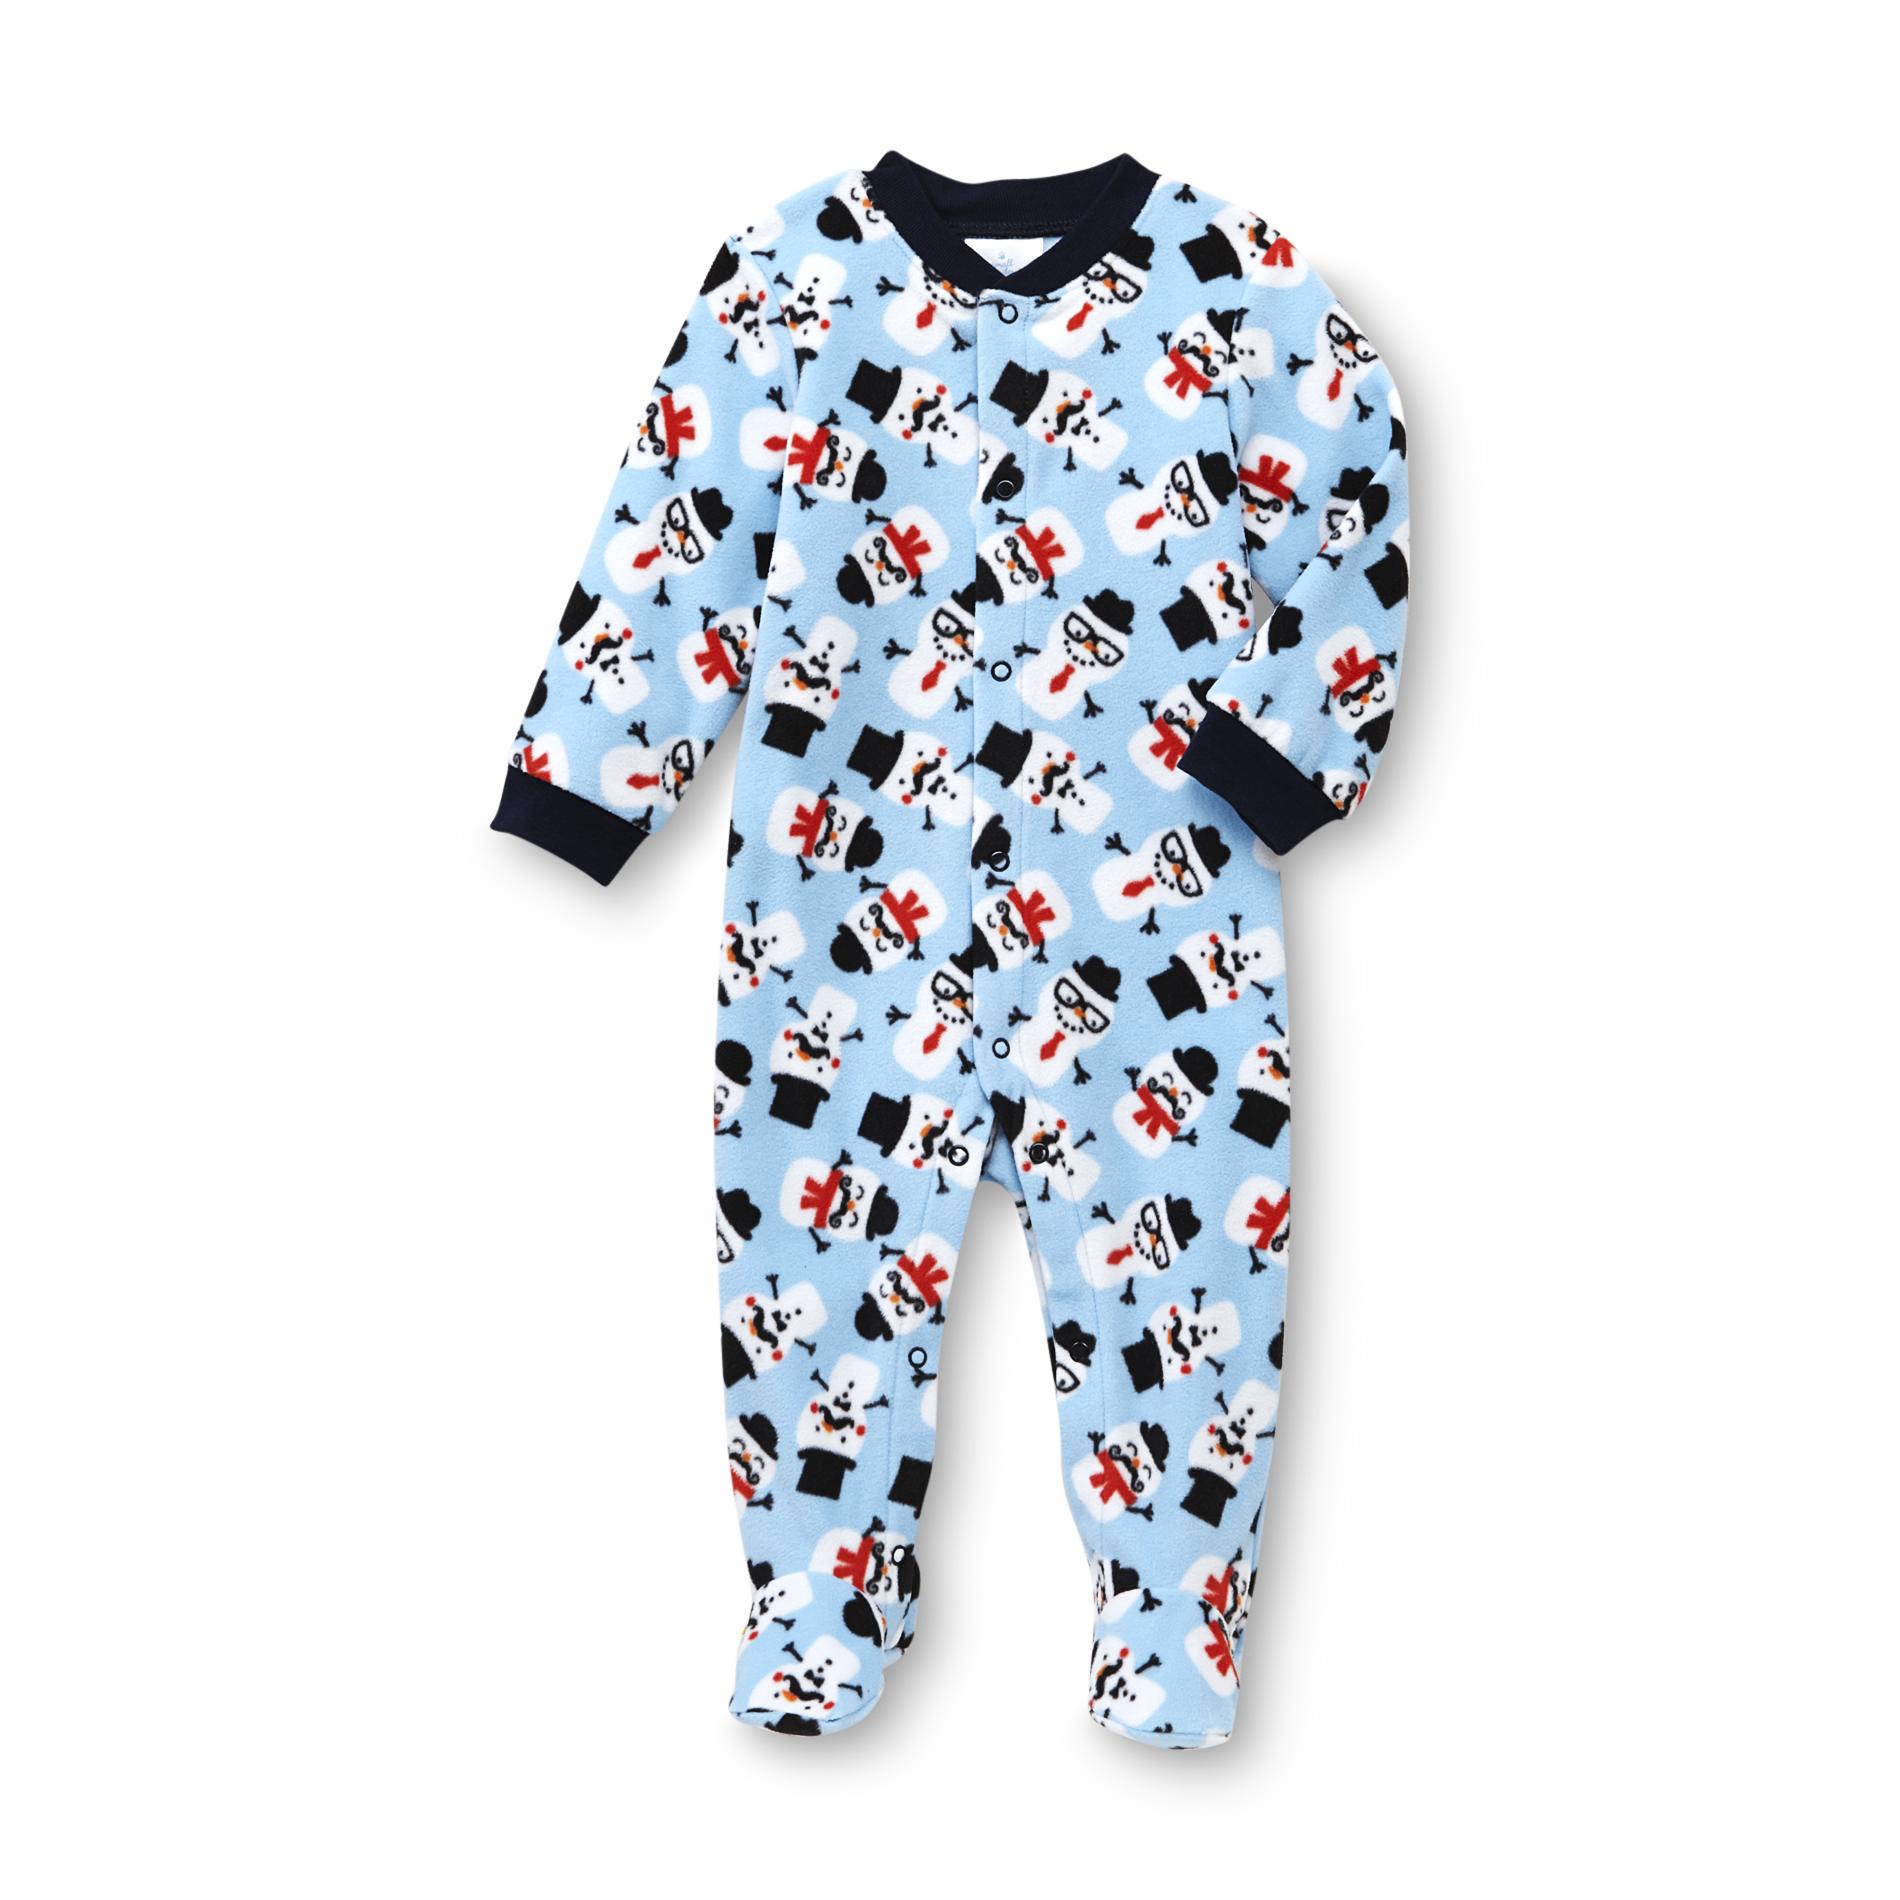 Small Wonders Newborn Boy's Fleece Sleeper Pajamas - Snowman